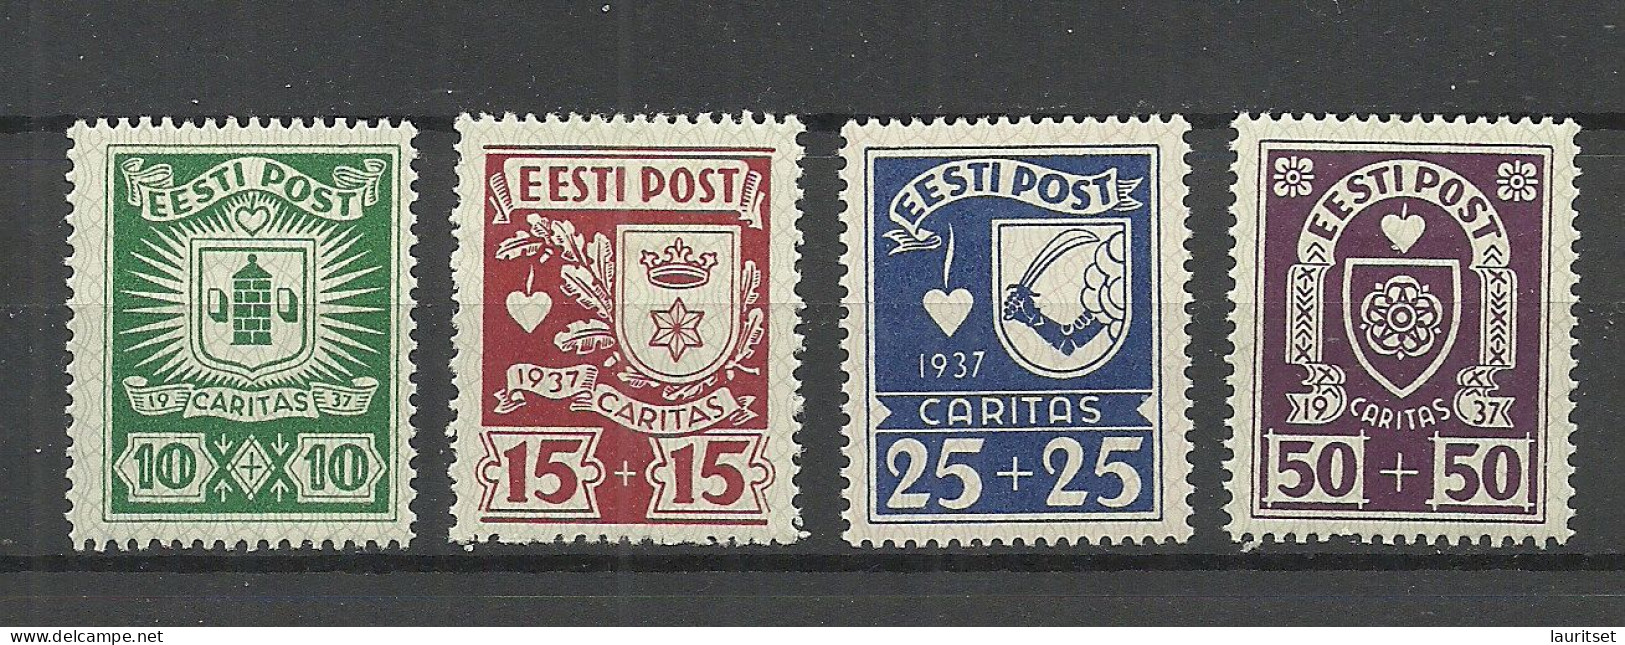 Estland Estonia 1937 Michel 127 - 130 Caritas * - Estland